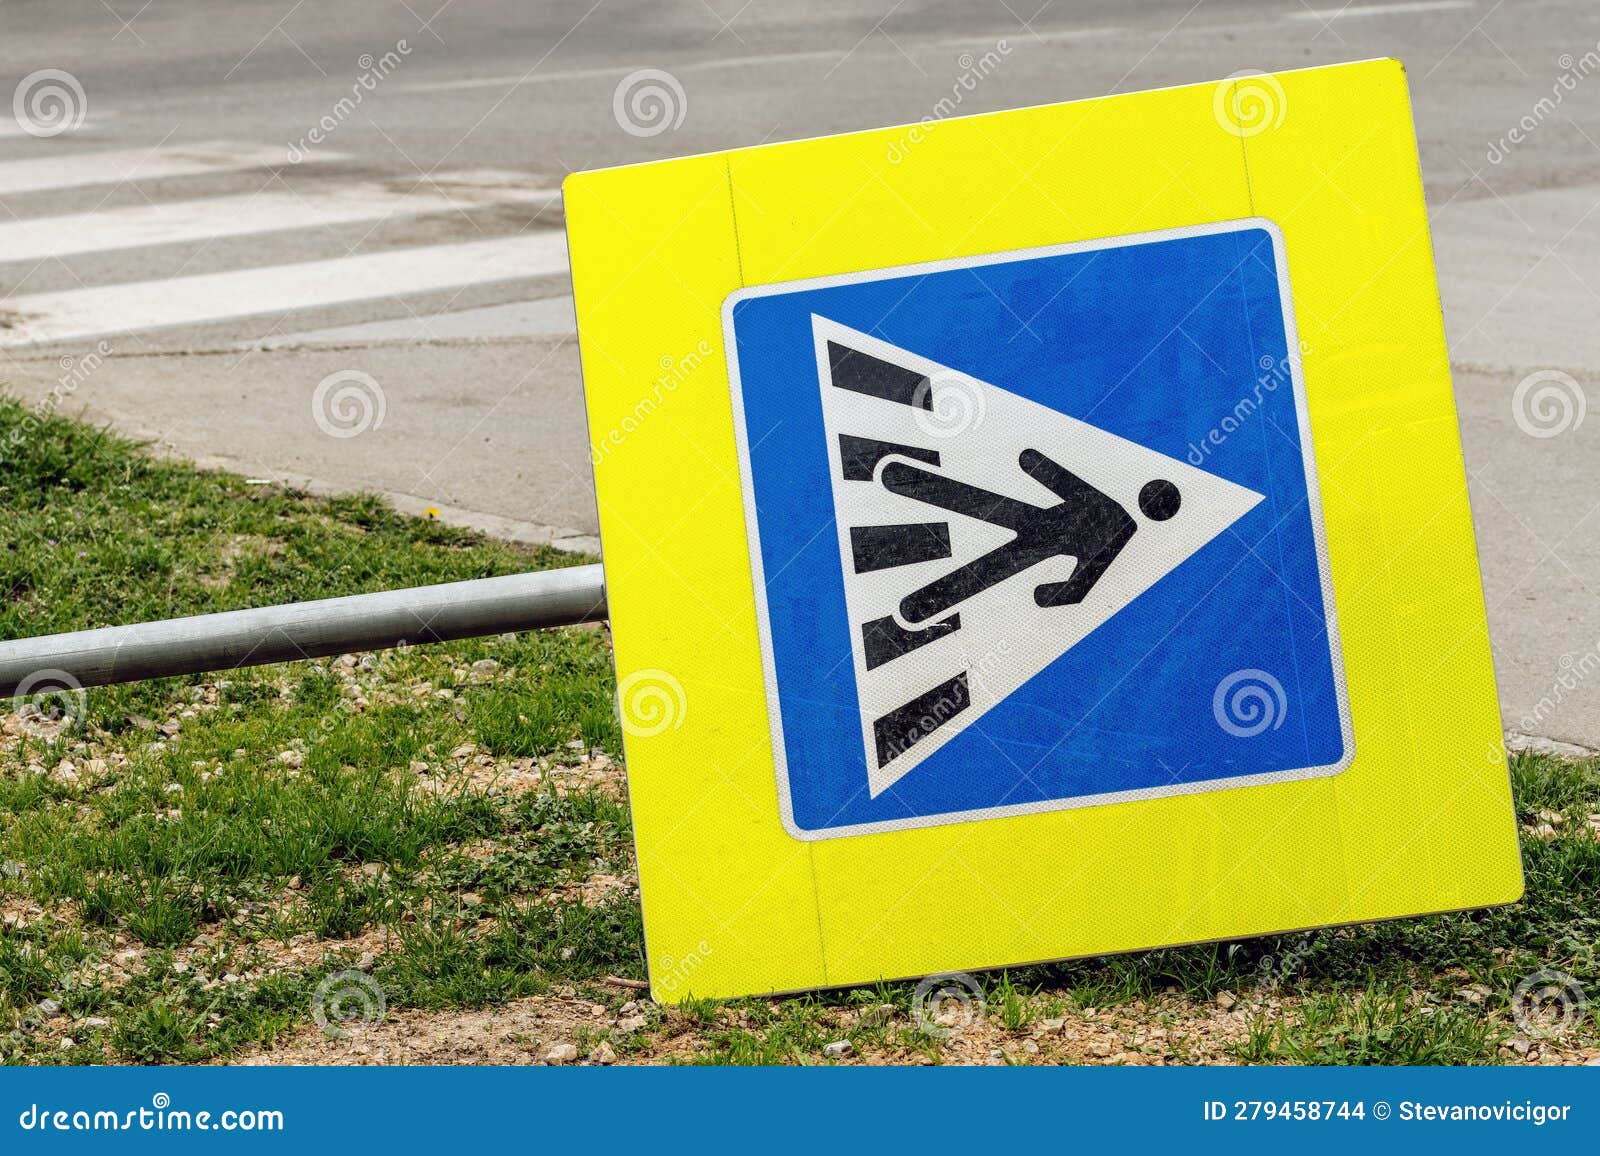 knocked down european pedestrian crossing sign